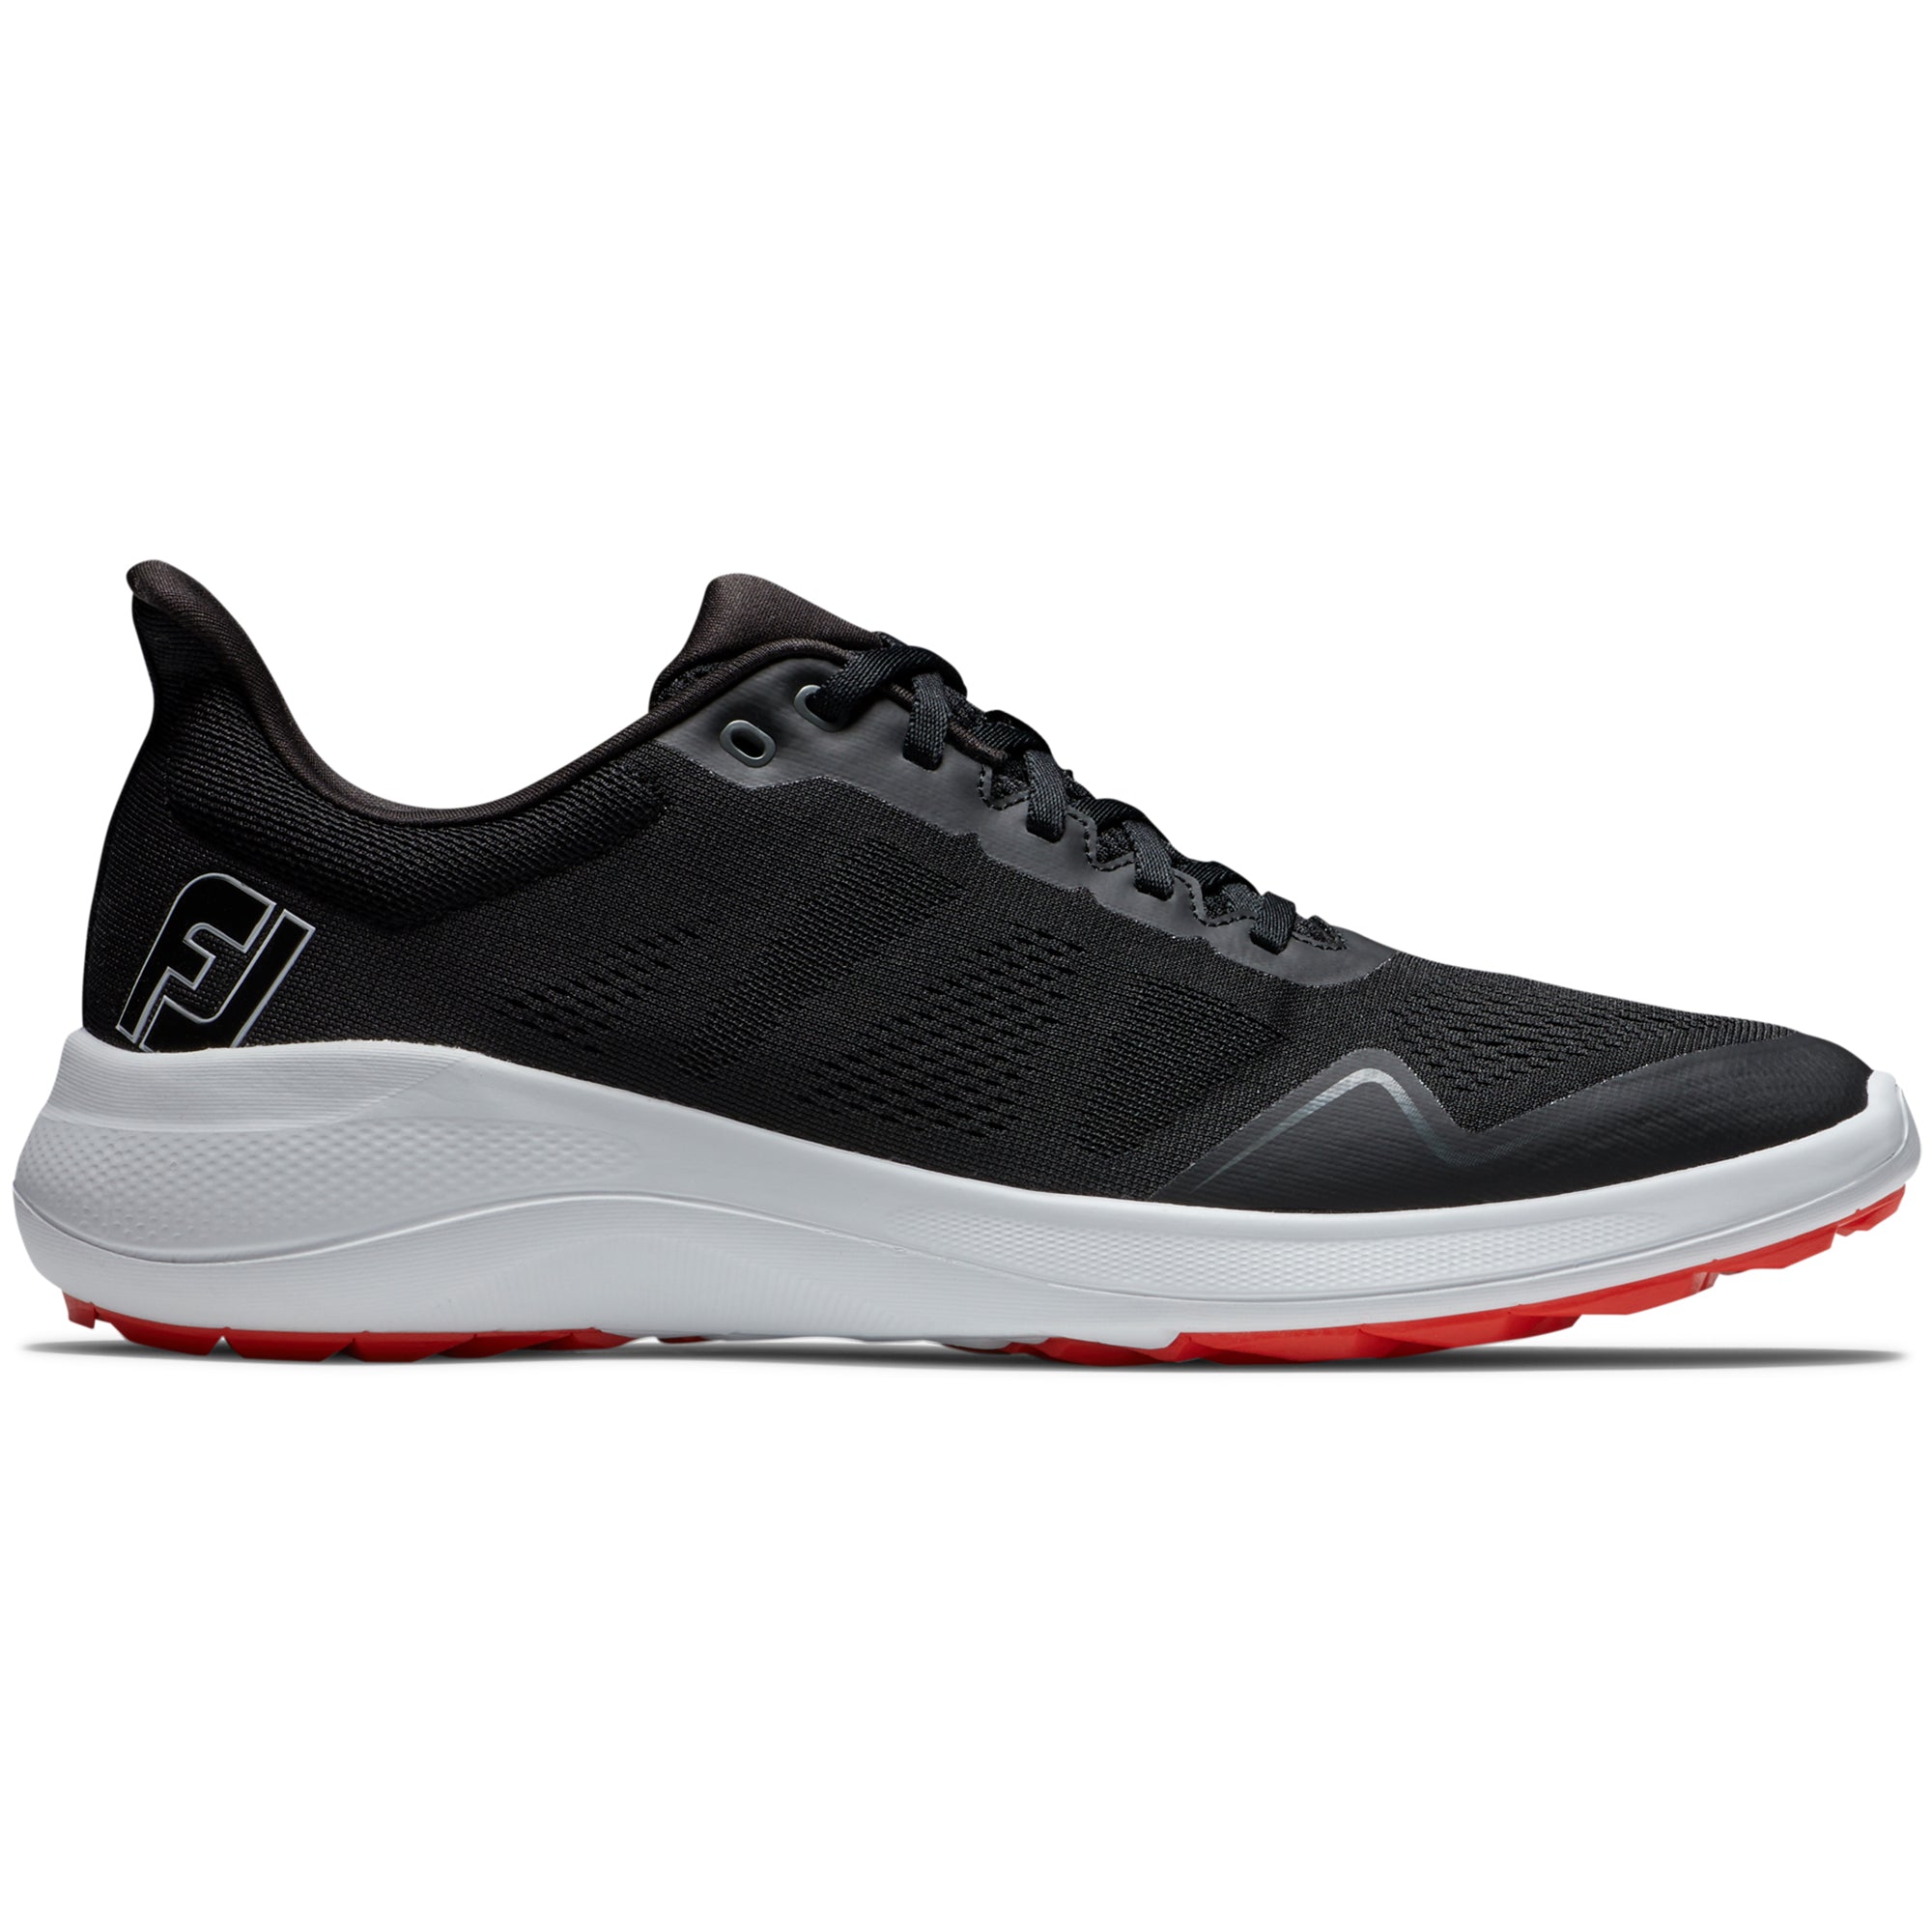 footjoy-fj-flex-athletic-golf-shoes-56141-black-white-red